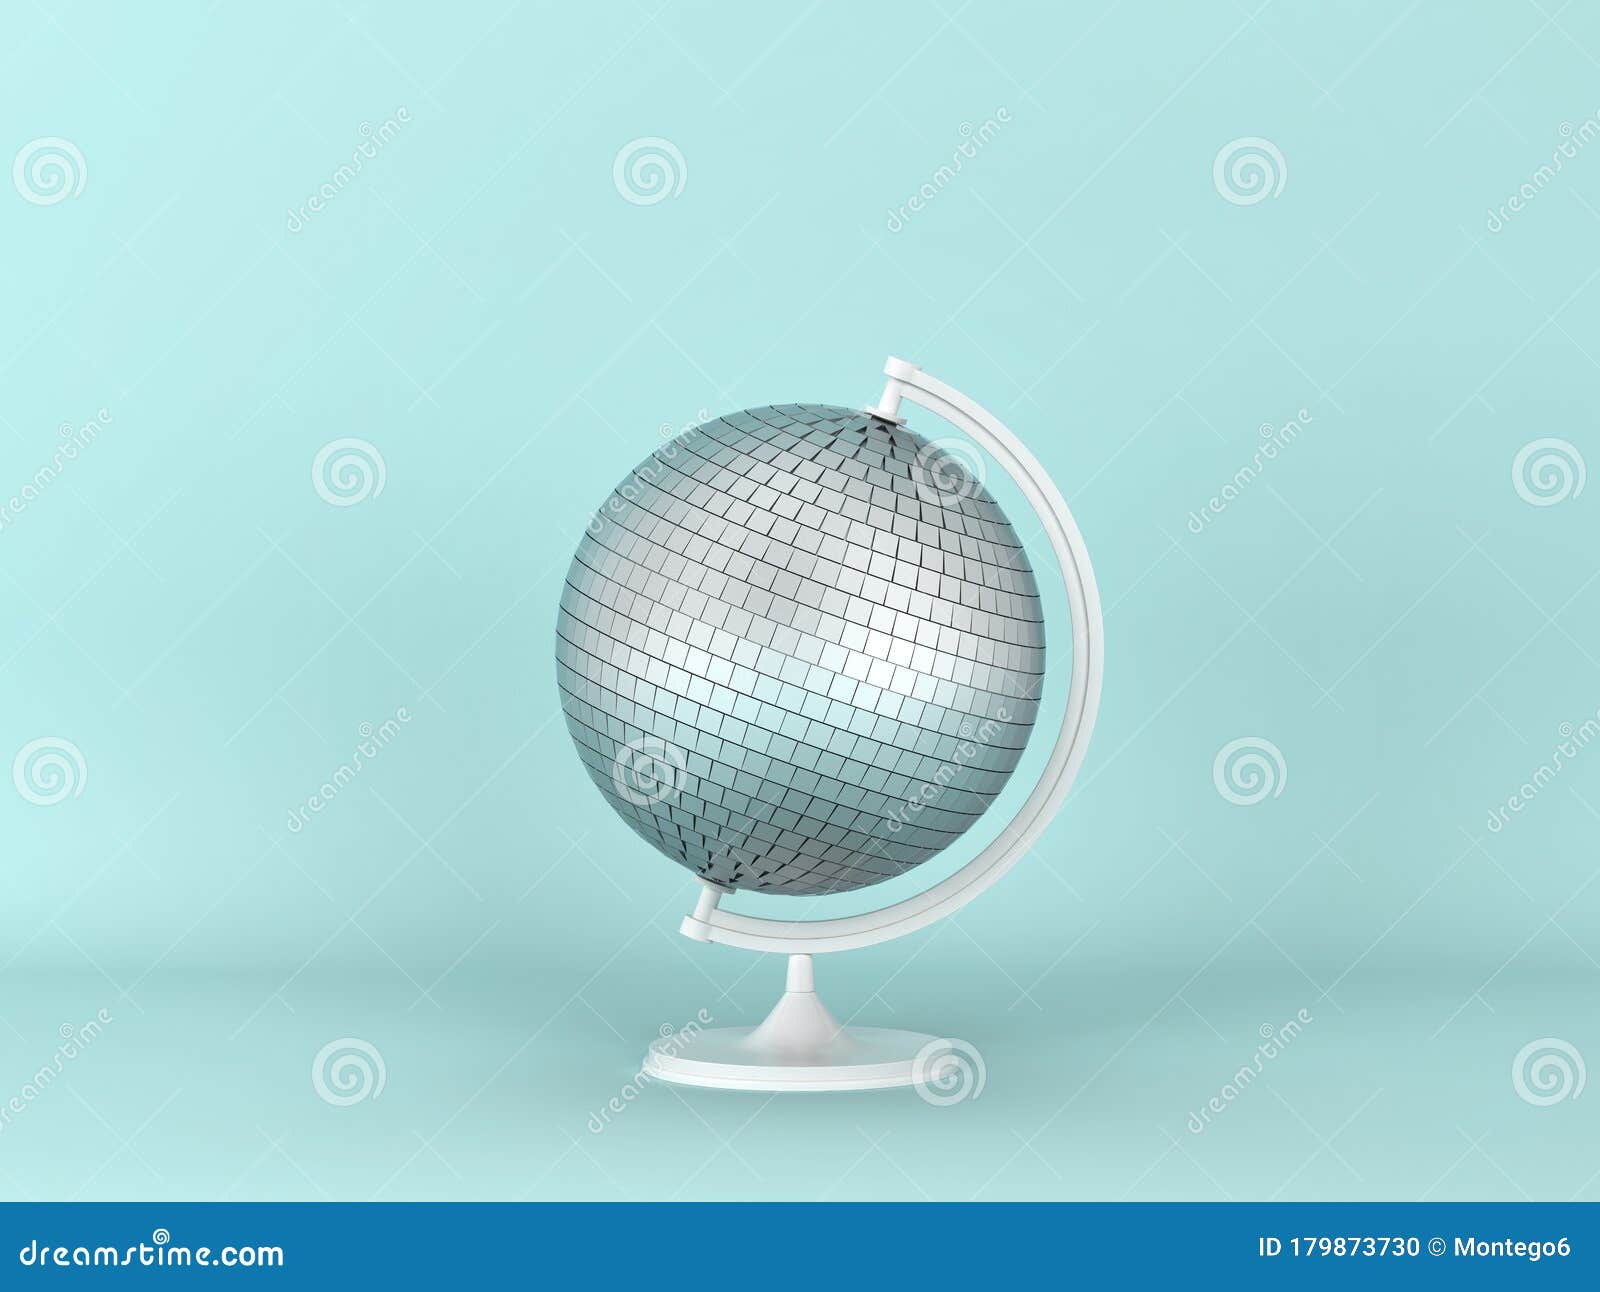 disco globus on light blue background